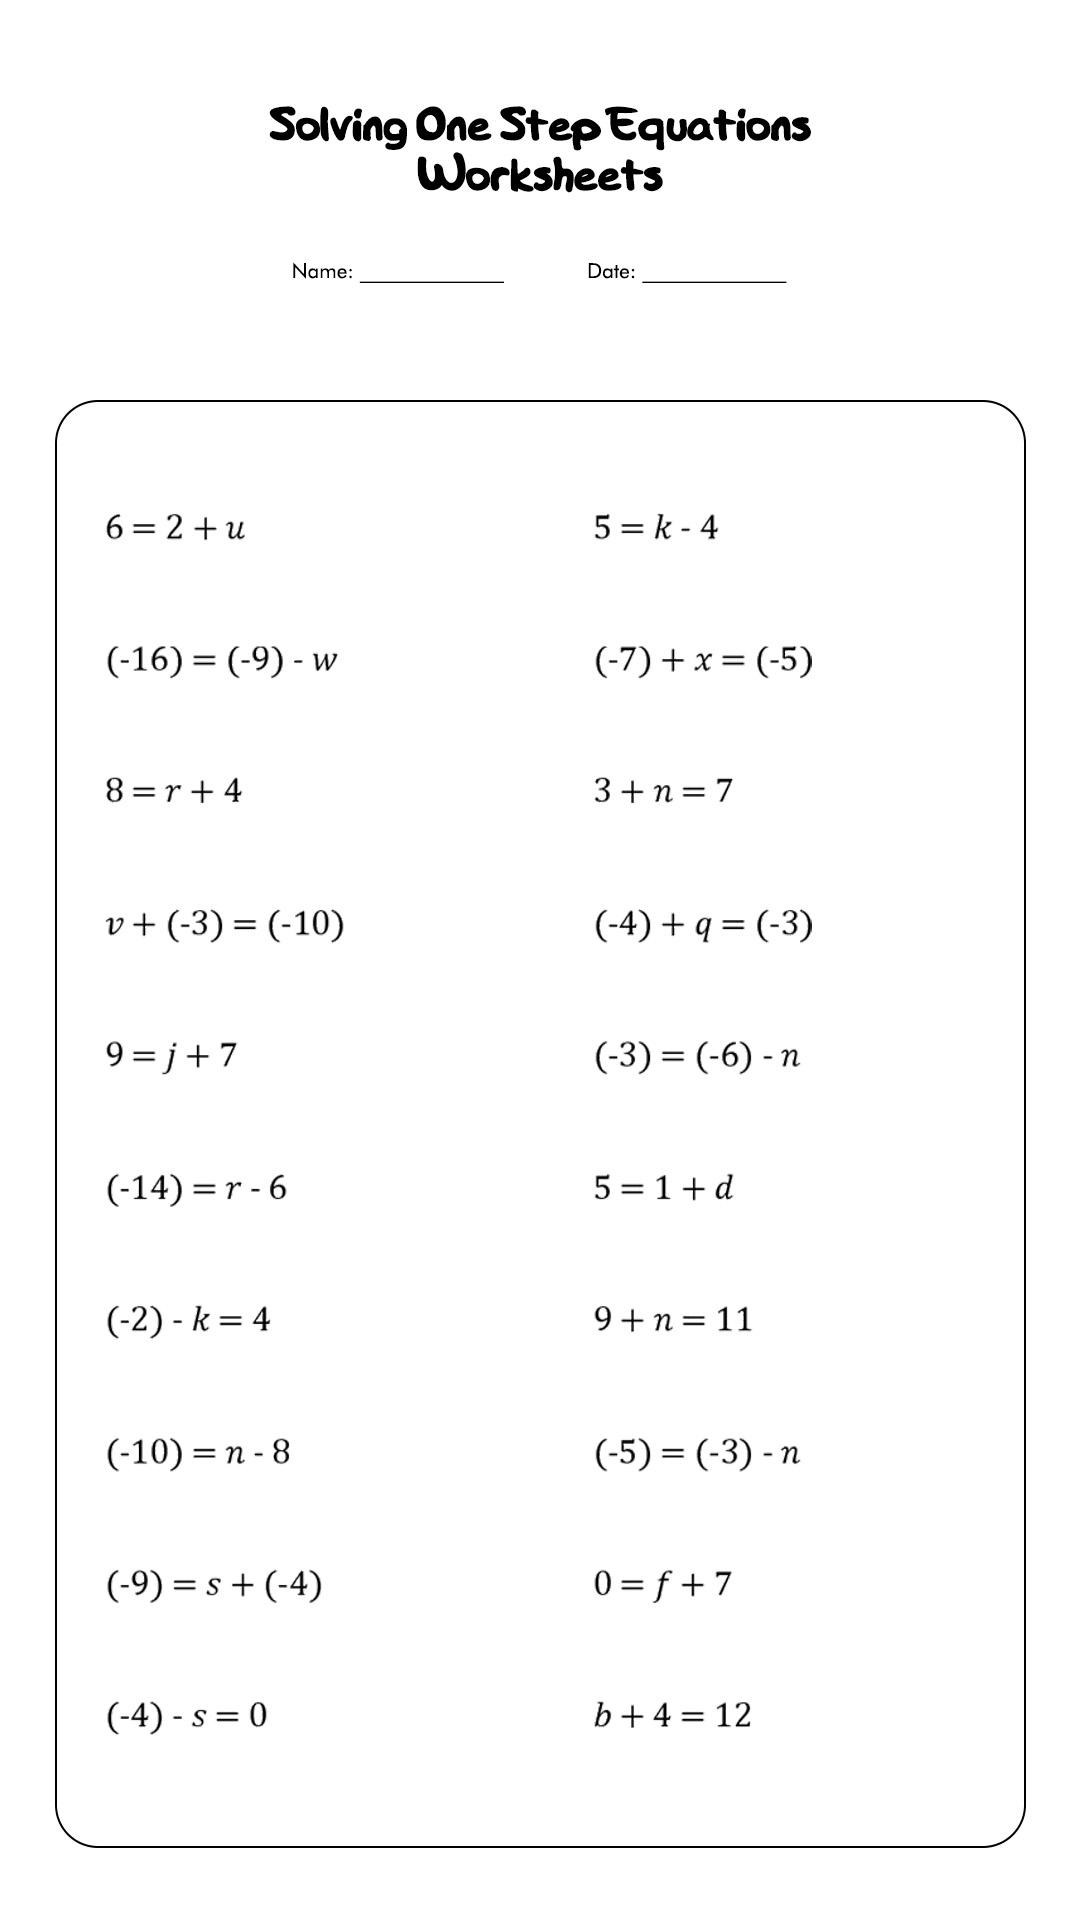 Solving One Step Equations Worksheets Image